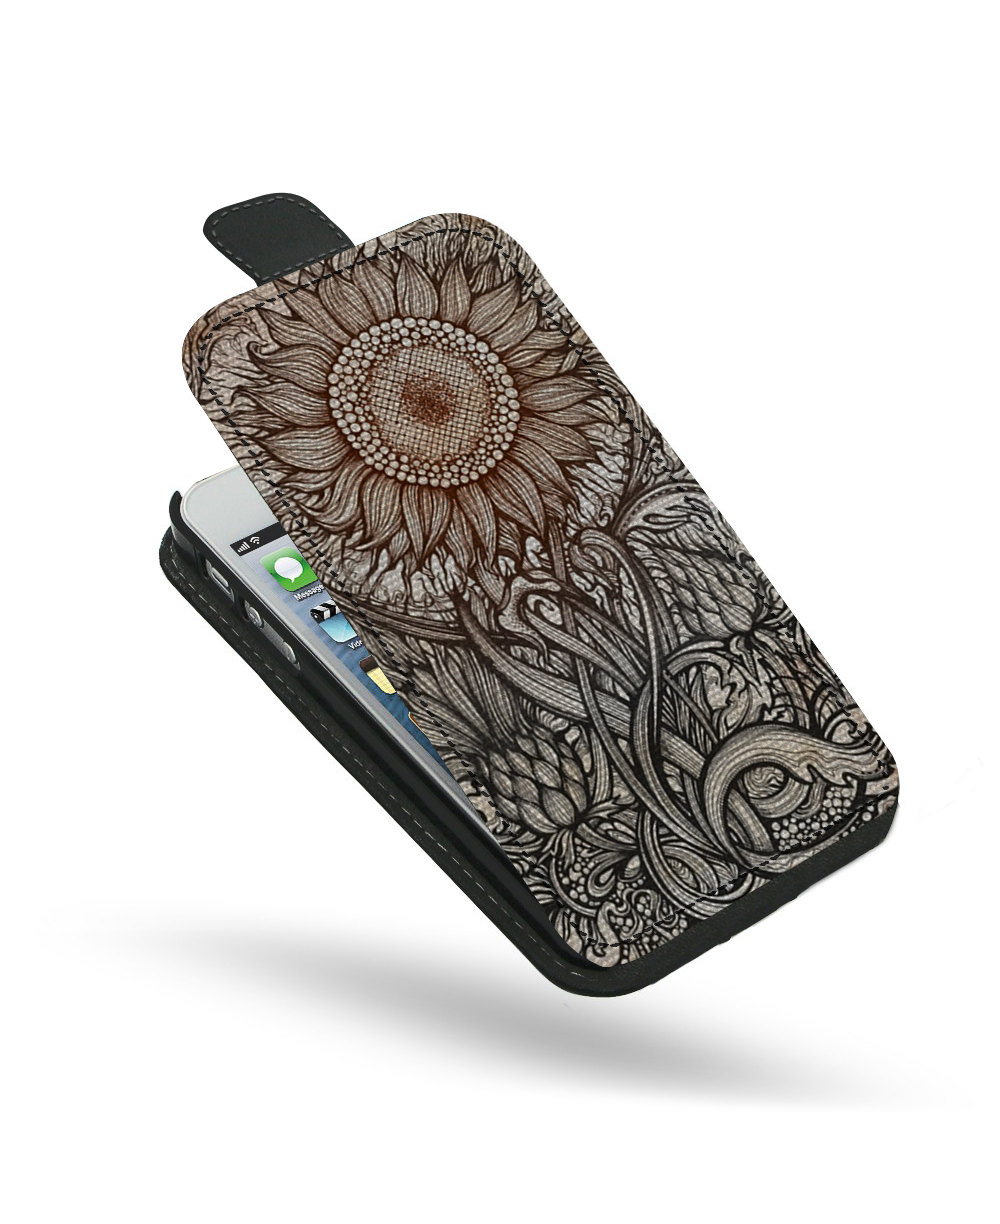 Dapip-013 - Blaudzun's Heavy Flowers Case - Leather Case - Iphone 4/4s Case - Iphone 5/5s Case